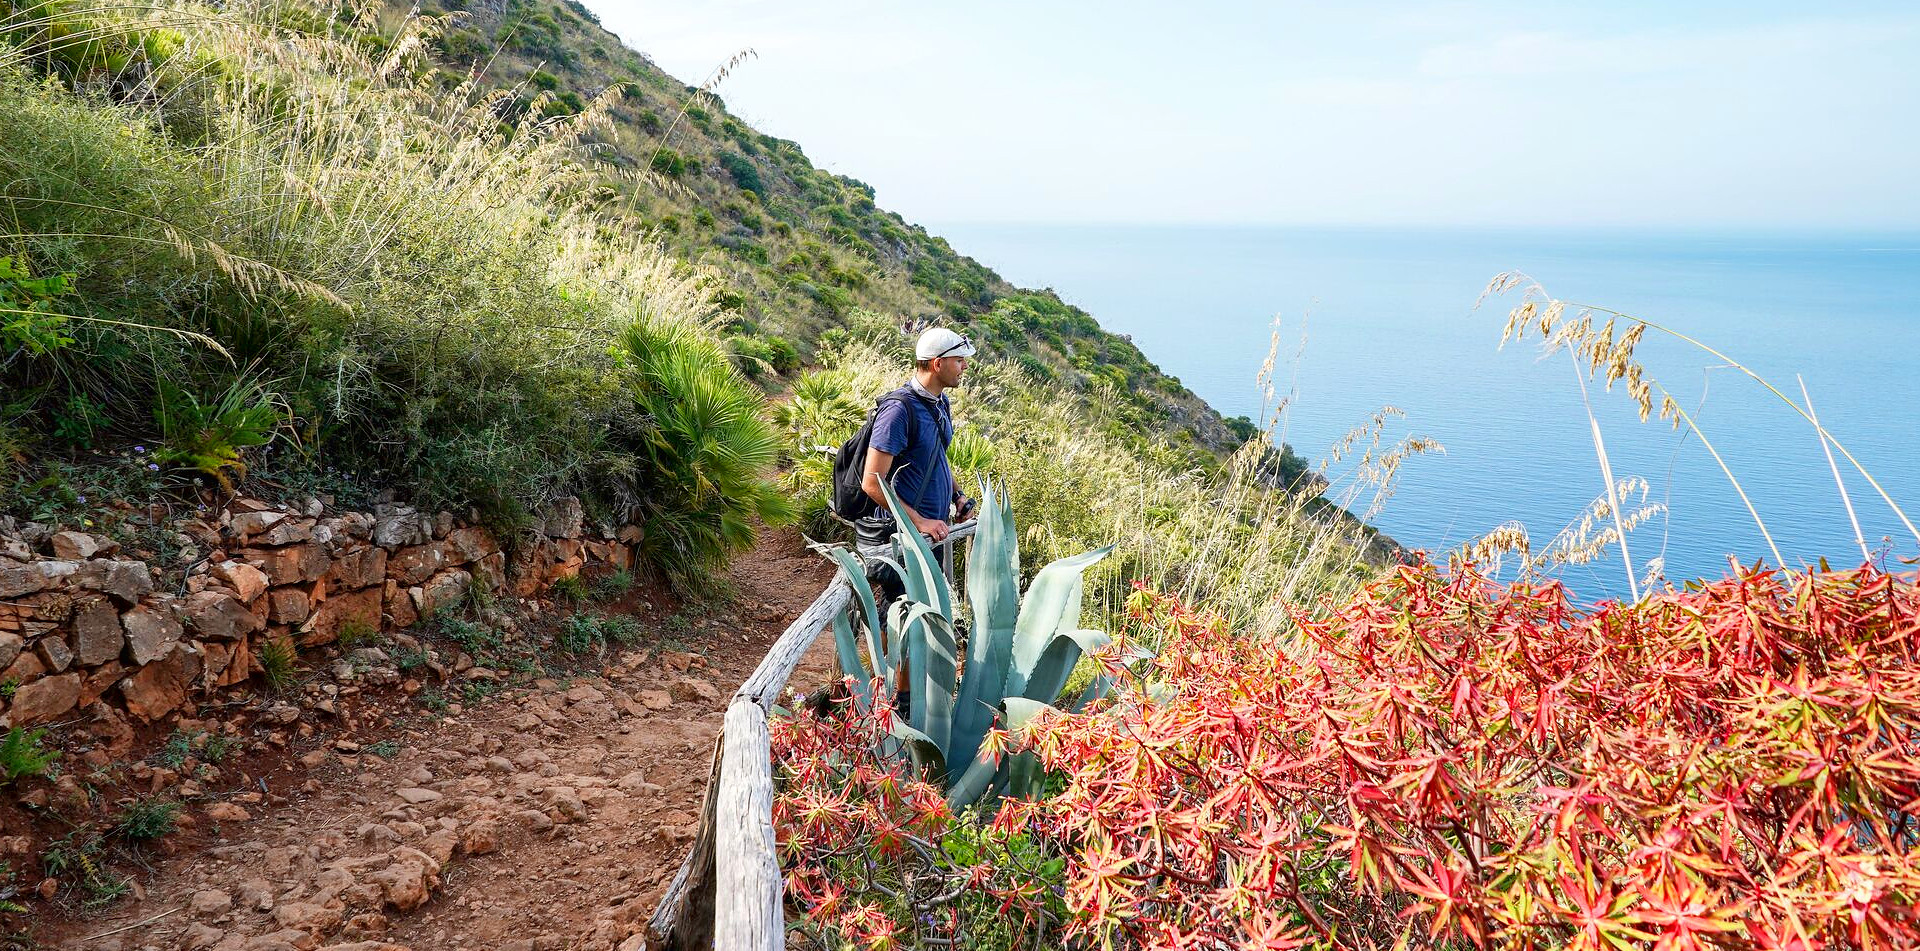 Hike, explore, enjoy Sicily!